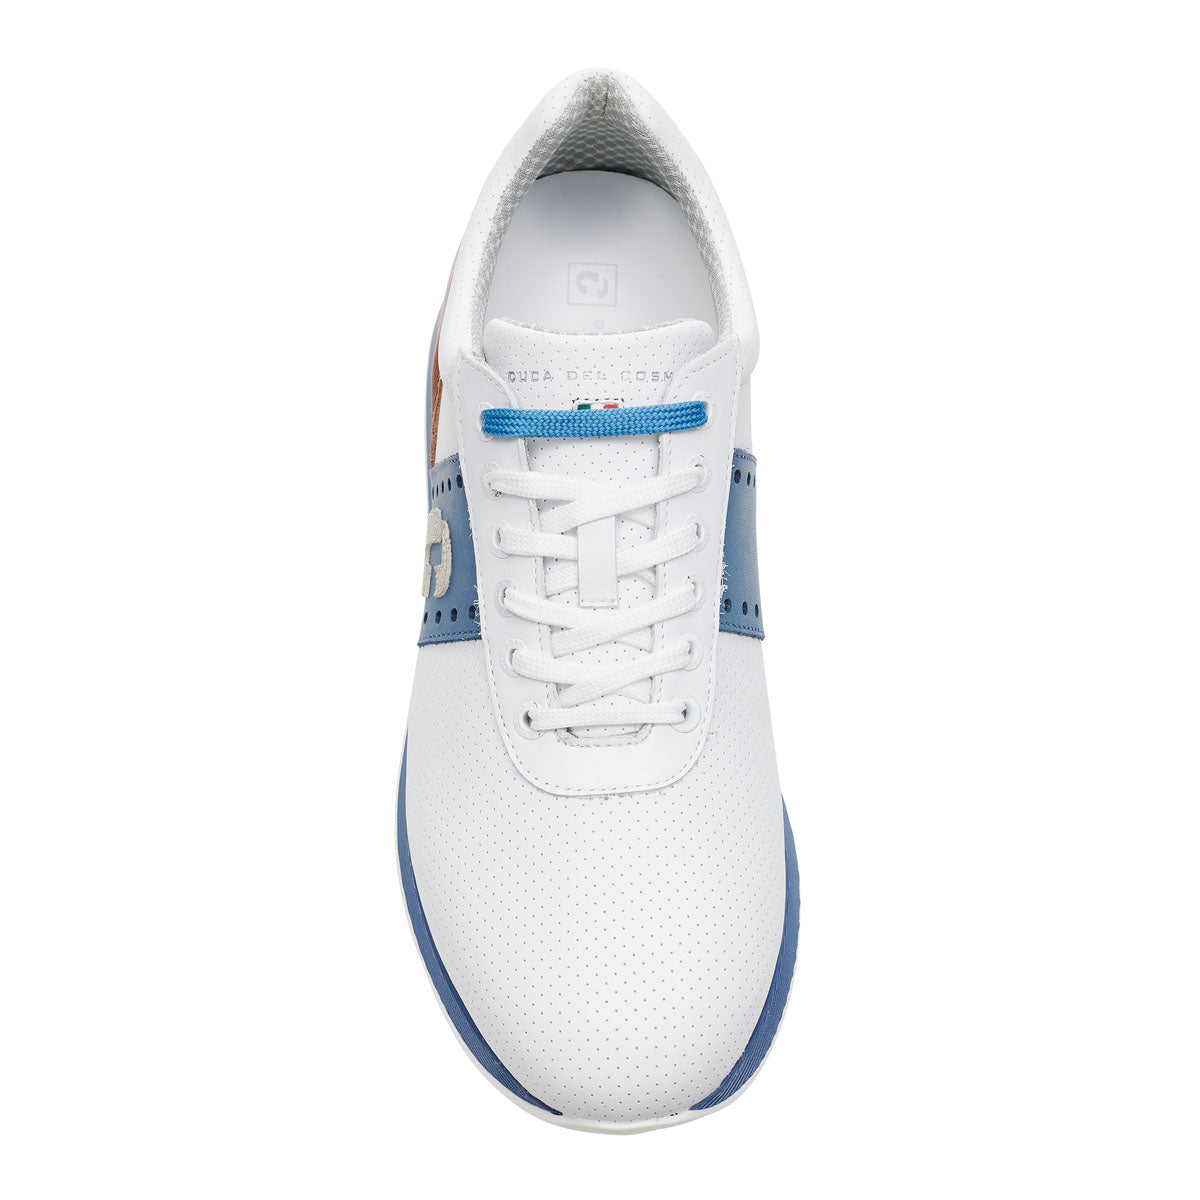 Men's Belair White / Cognac Golf Shoe